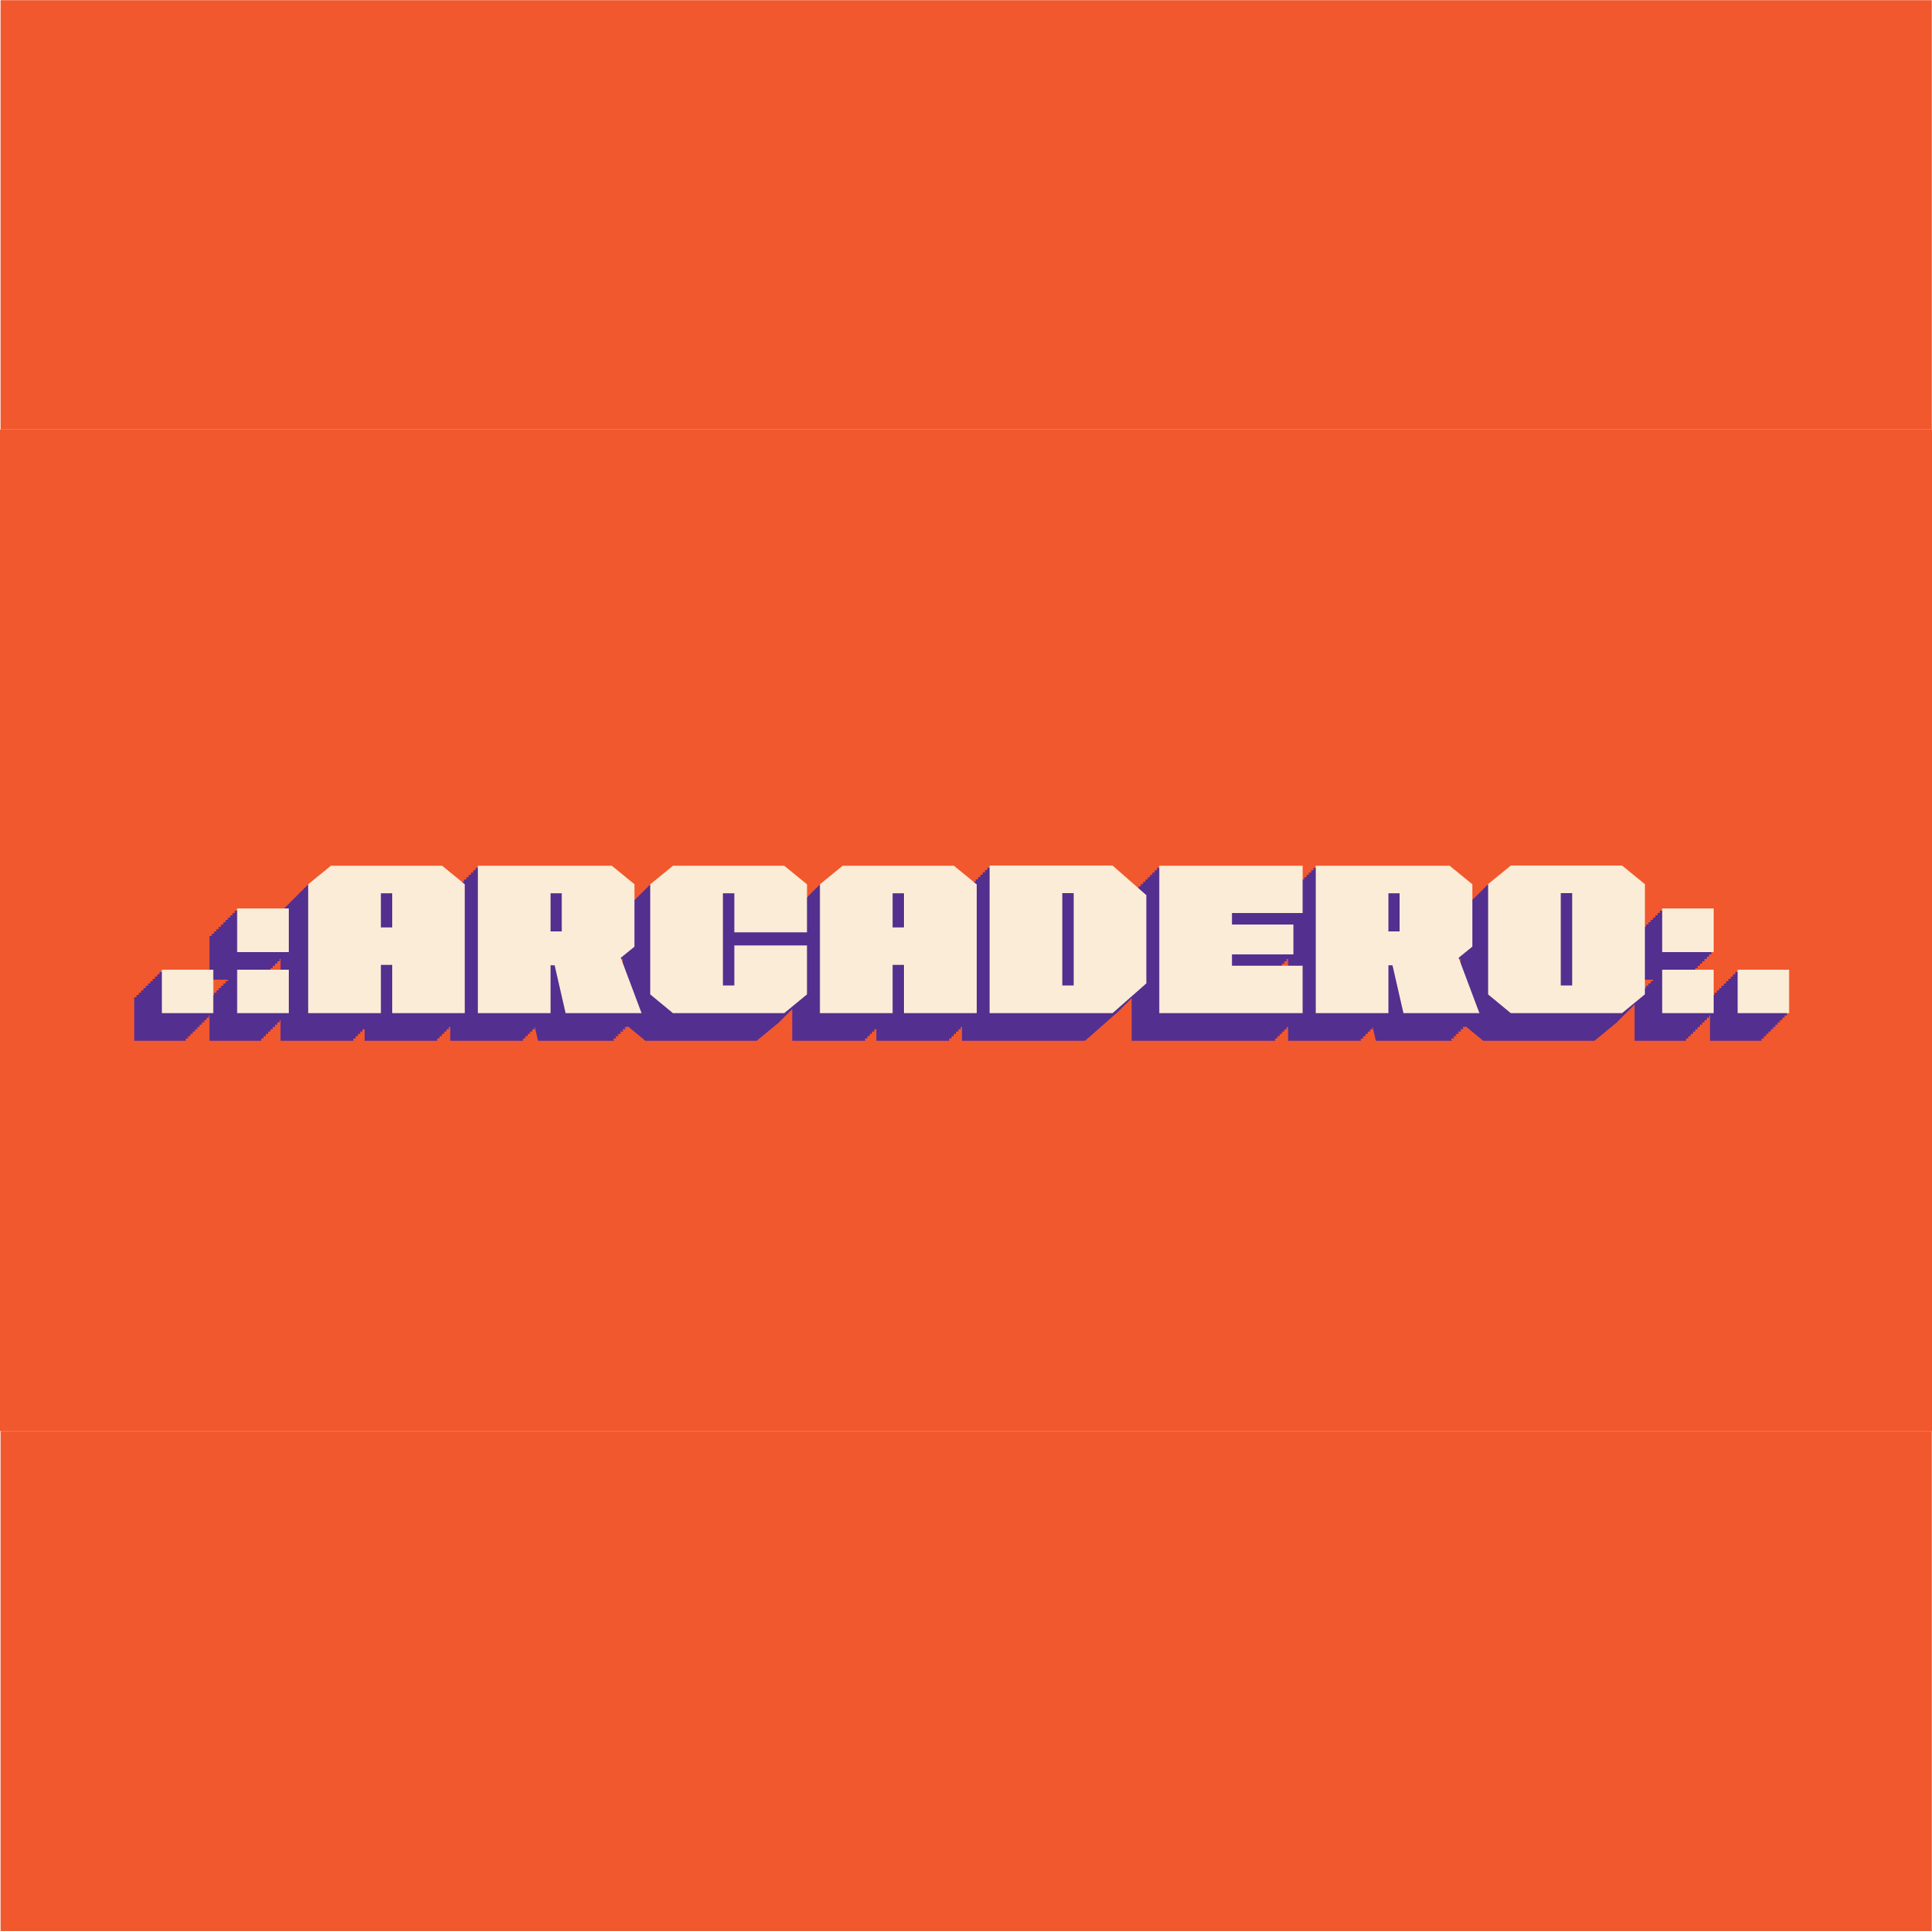 Picture representing text "Arcadero", red/orange background